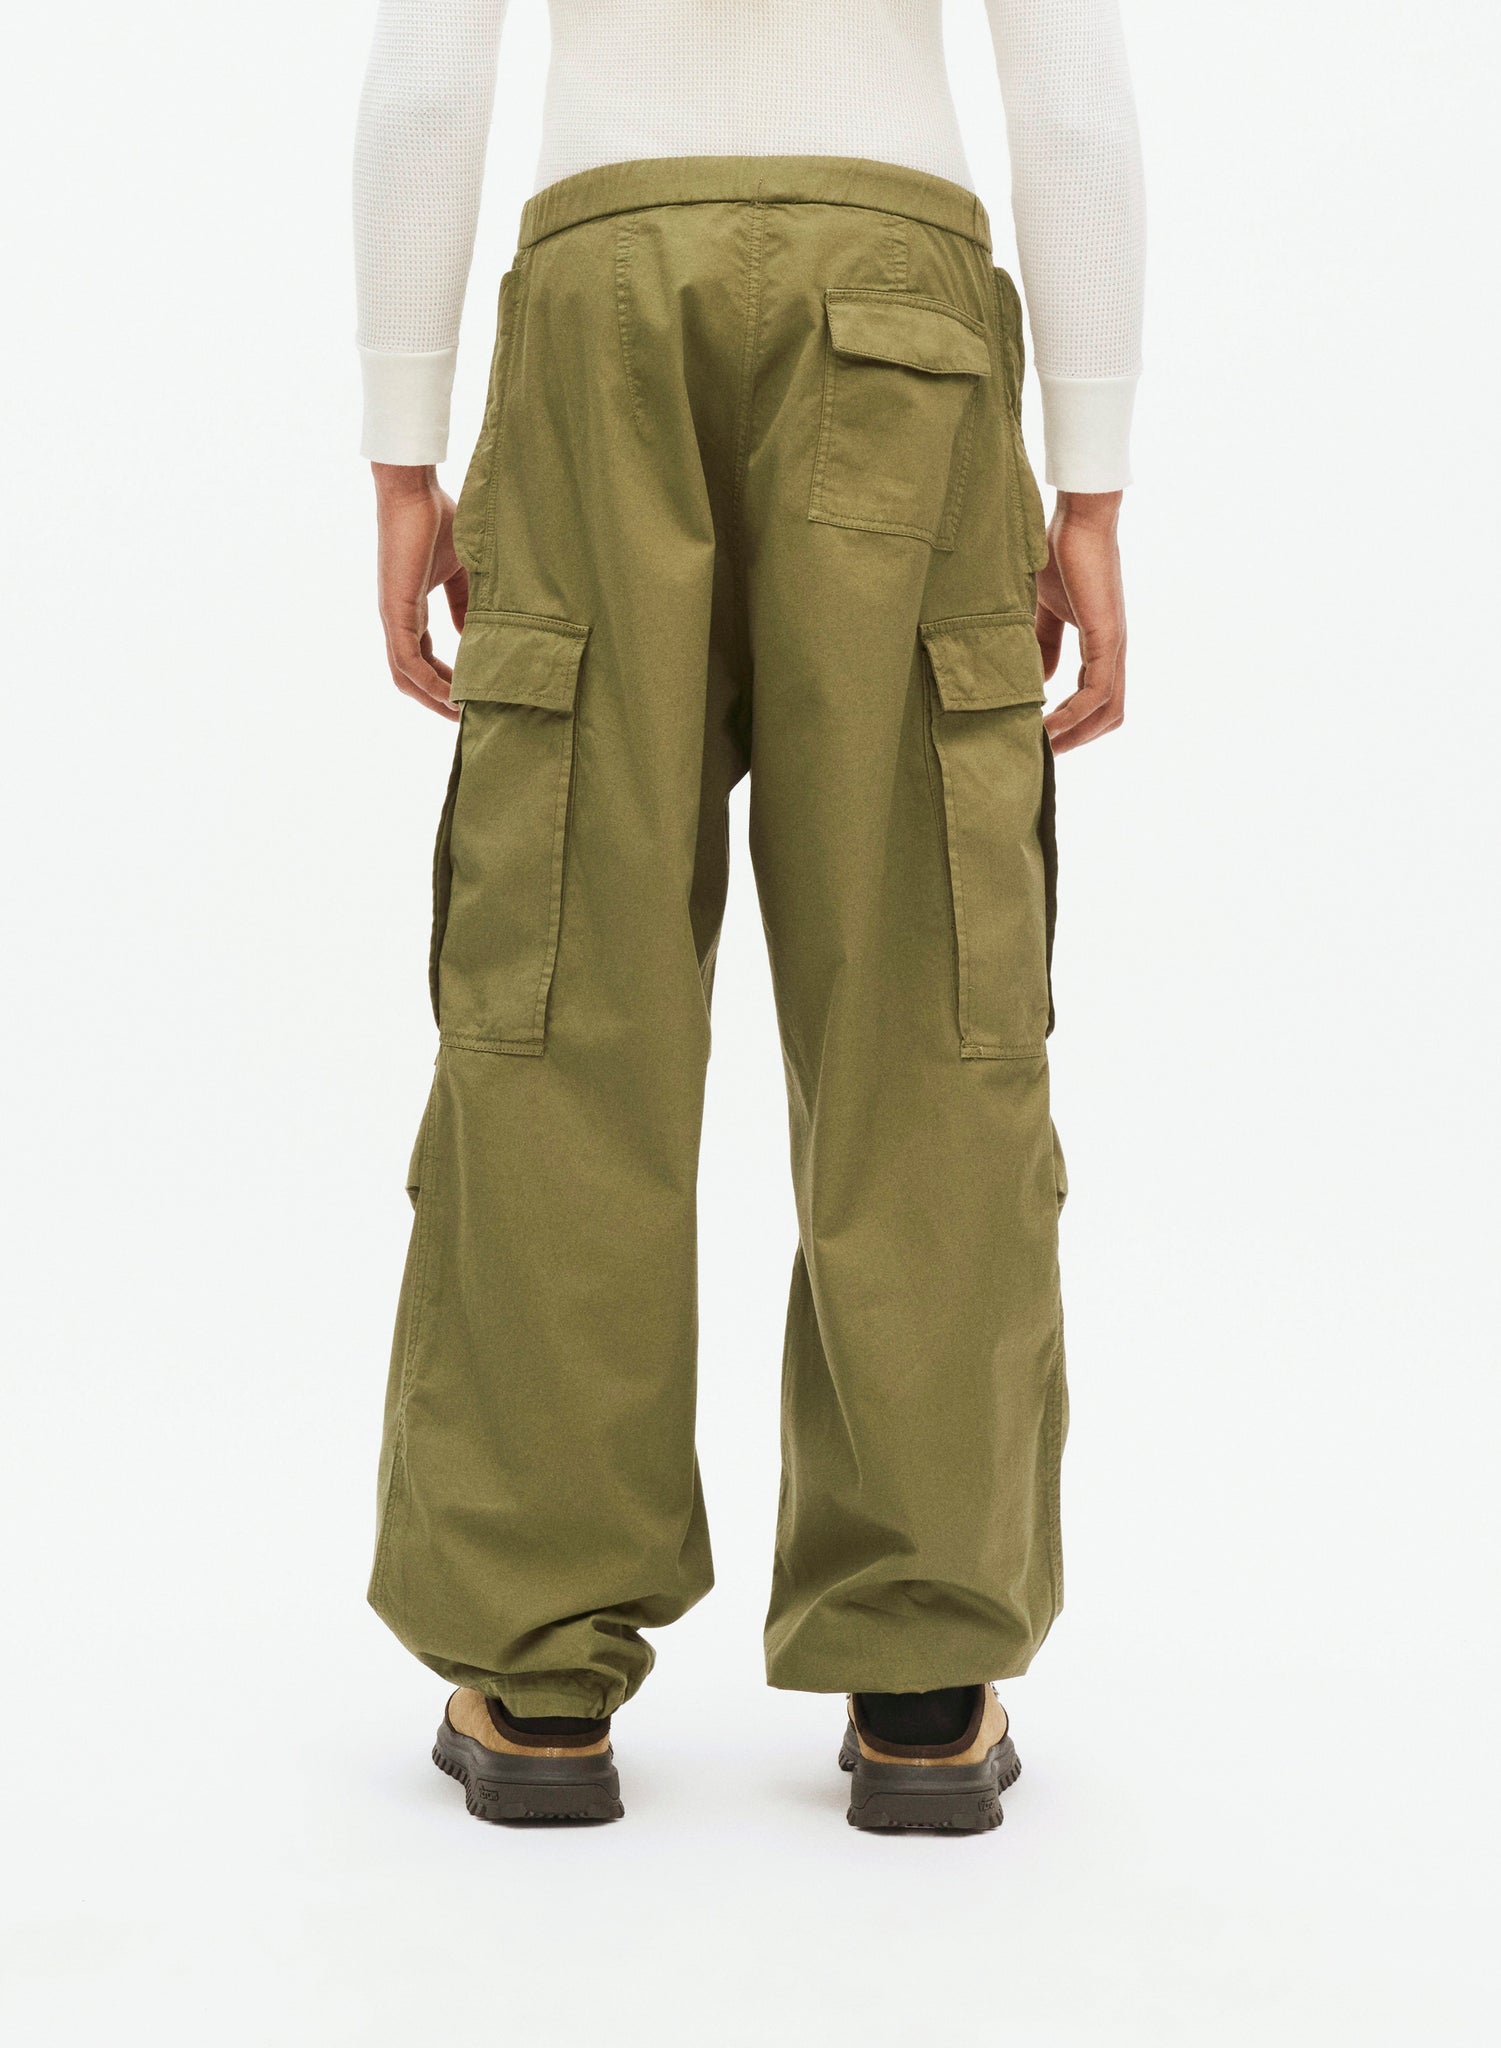 Khaki Studded Cargo Pants